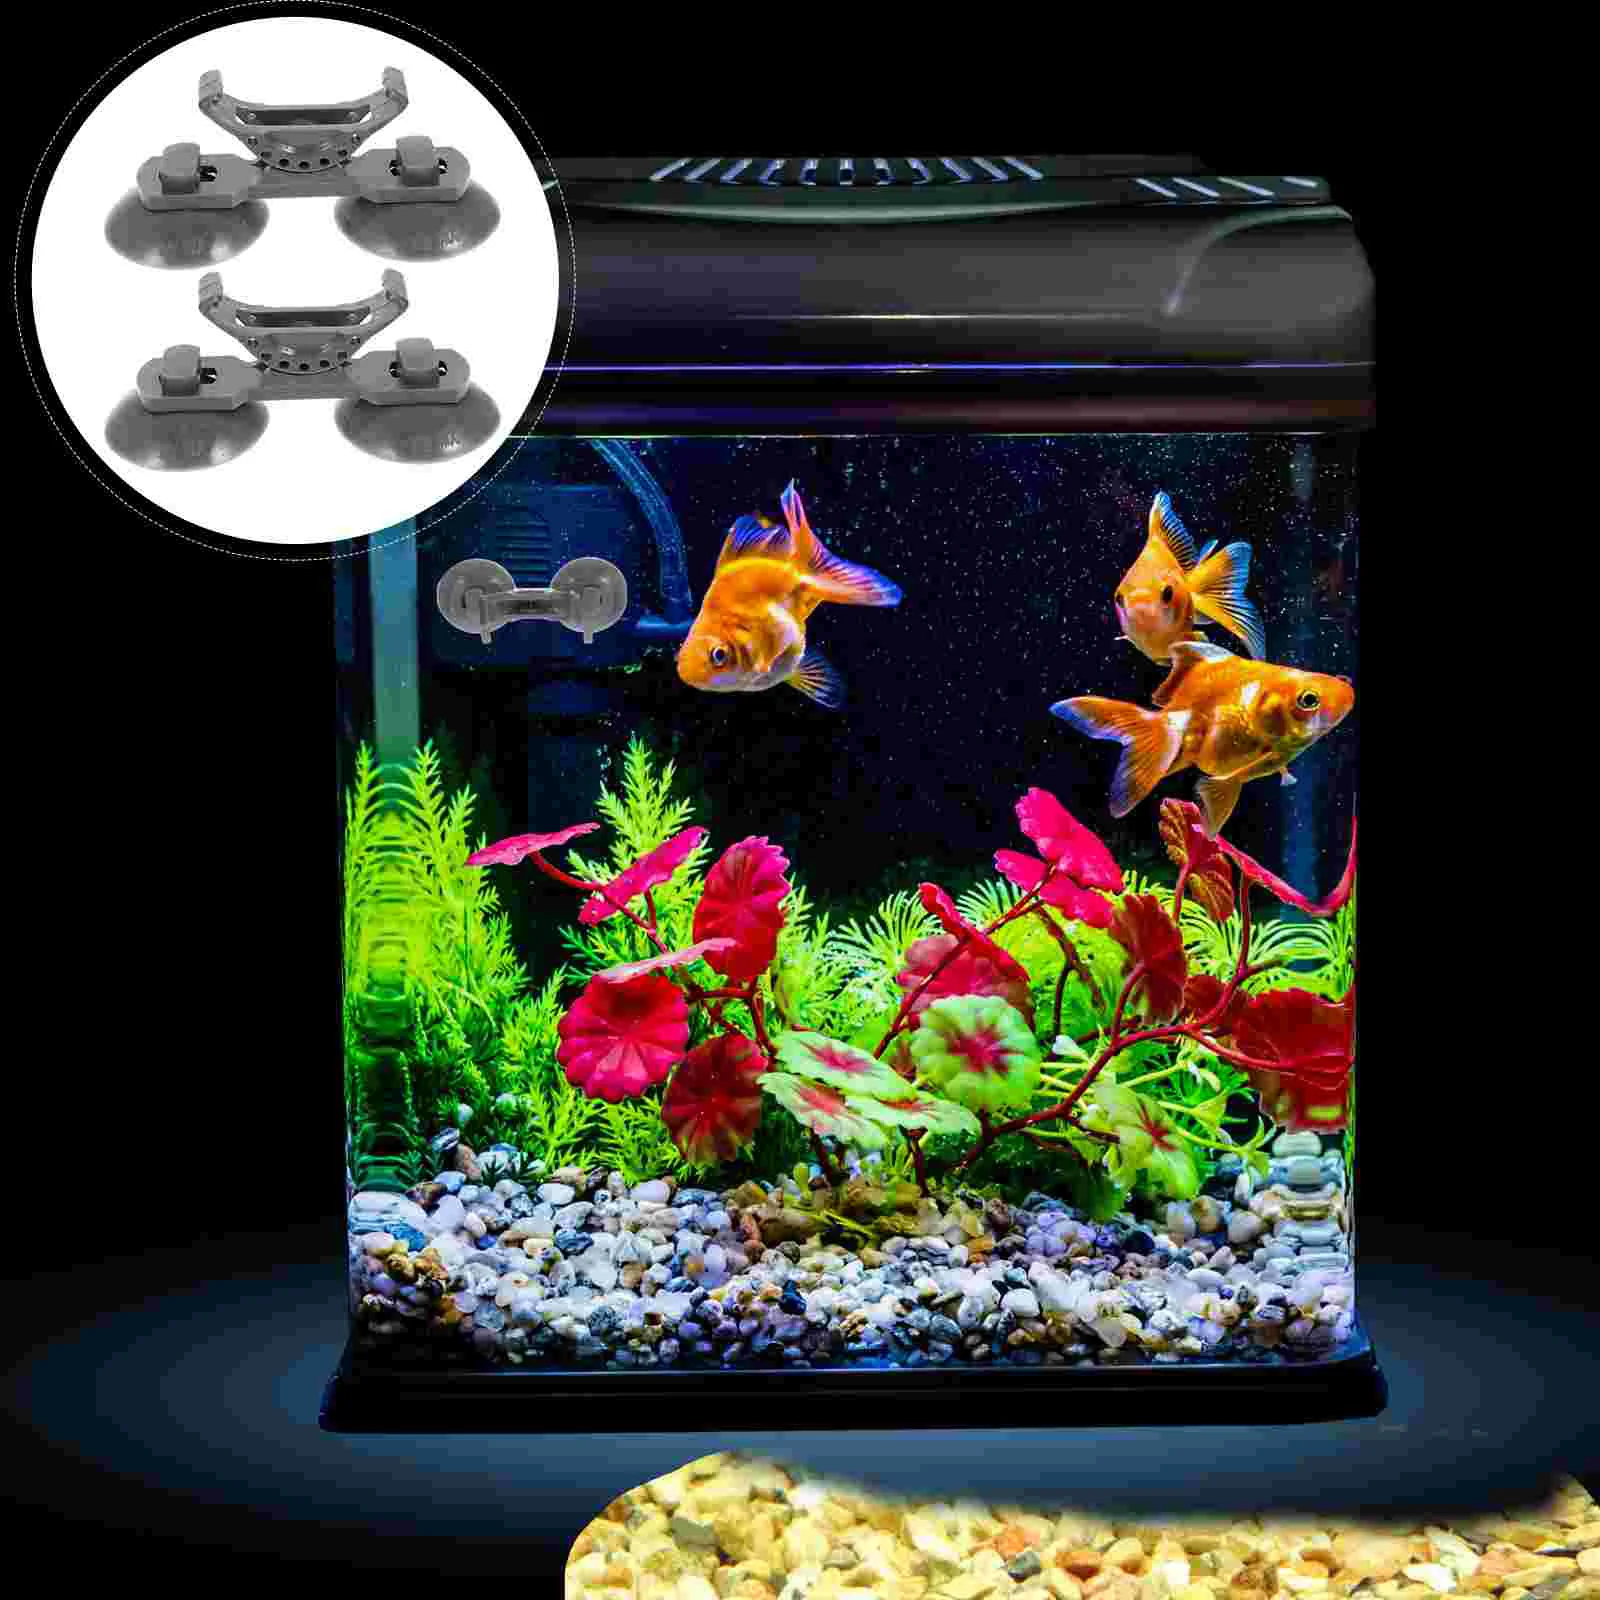 

Aquarium Tank Fish Light Lamp Holder Bracket Holdersterrarium Stand Hanger Rack Lighting Airline Accessories Heater Aquatic Led